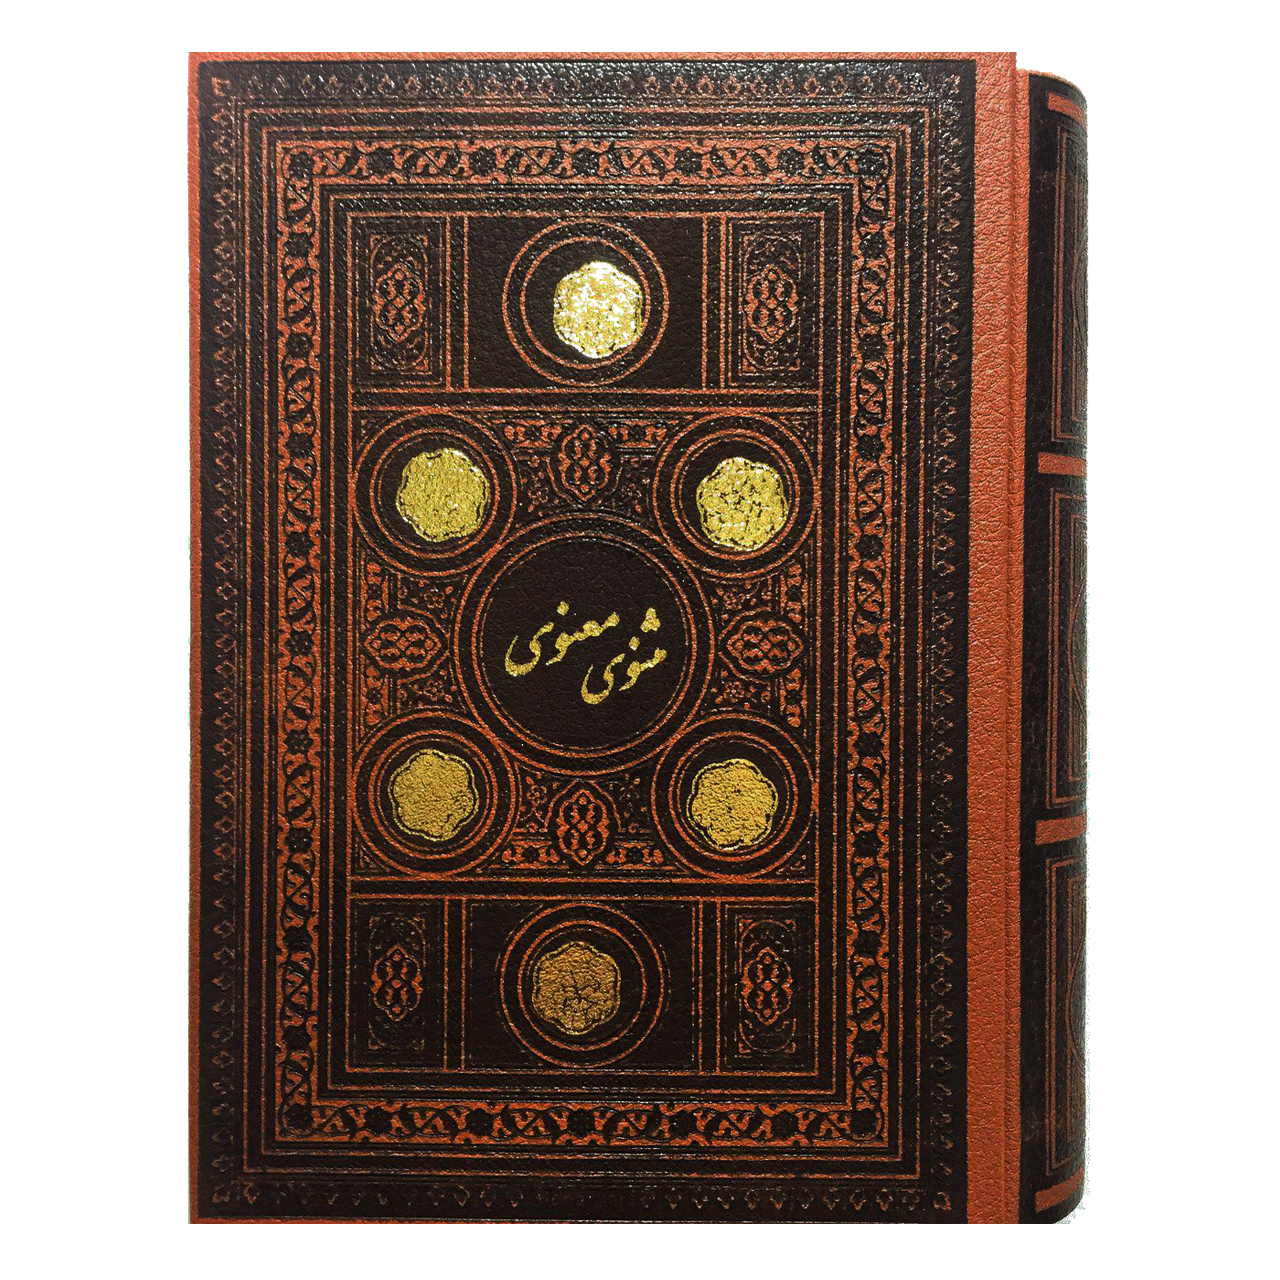 MASNAVI MANAVI book by JALALUDDIN MOHAMMAD BALKHI, PARMIS publications